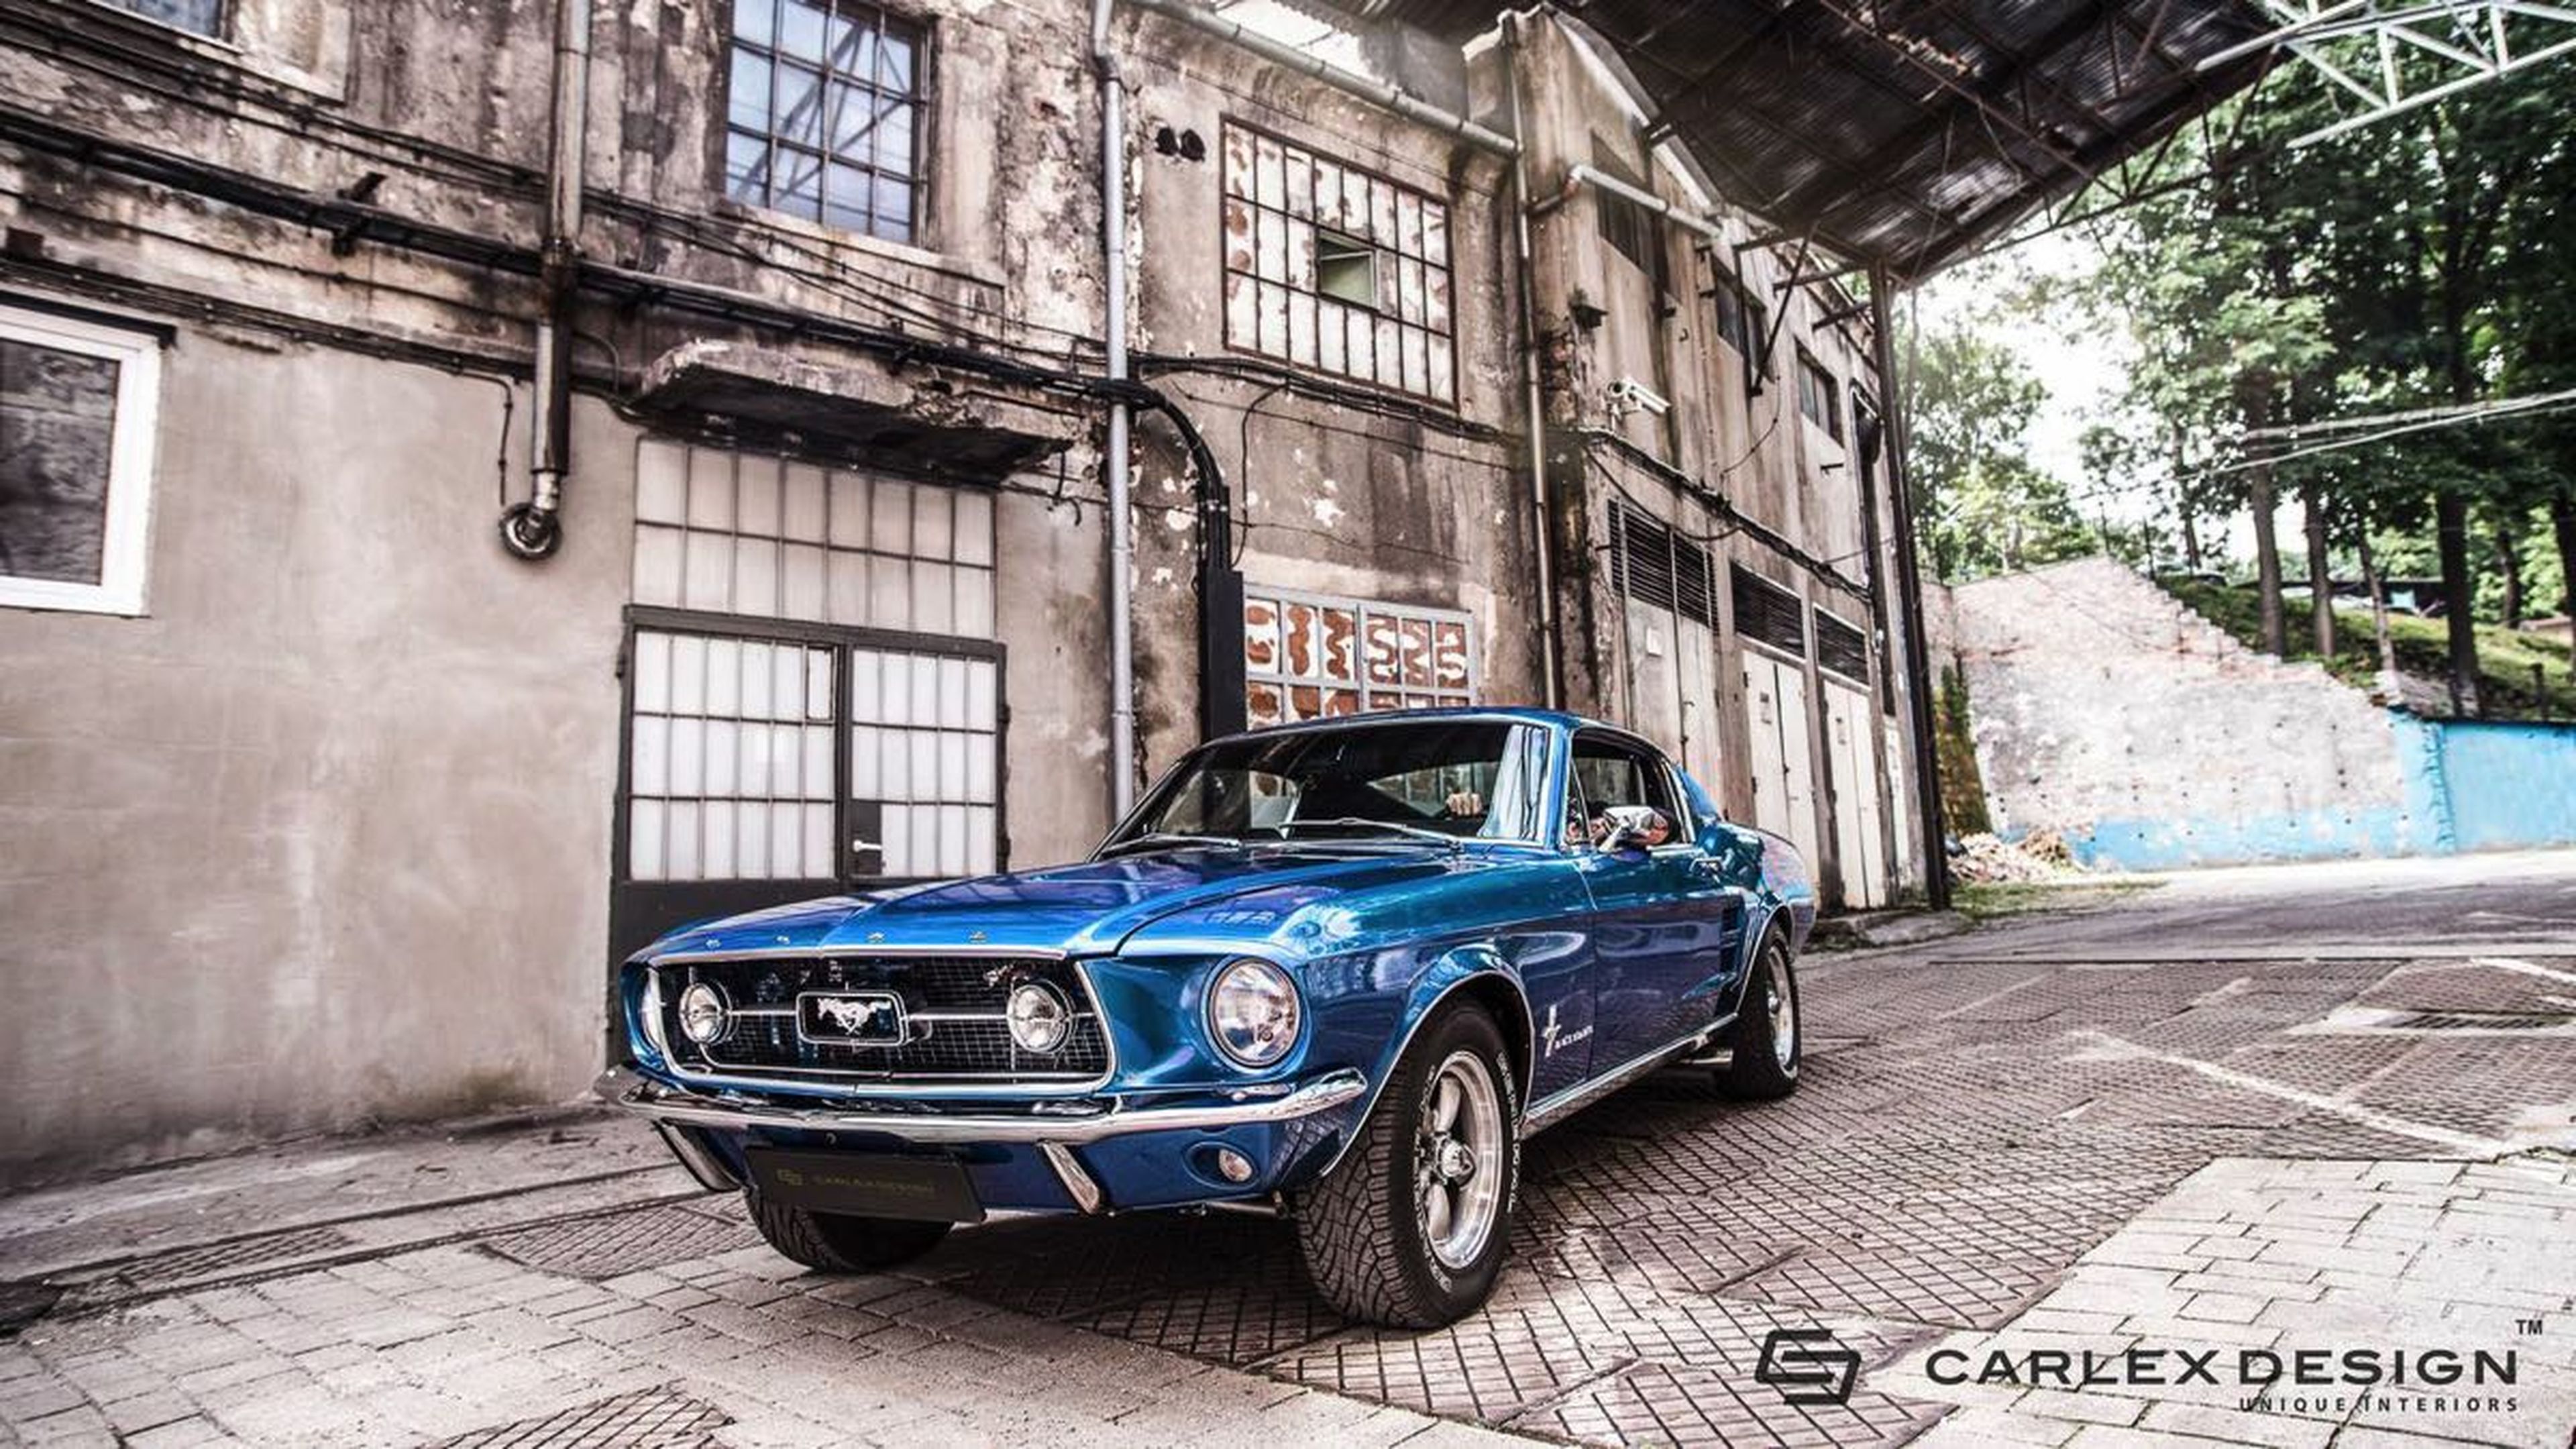 Ford Mustang by carlex design tres cuartos